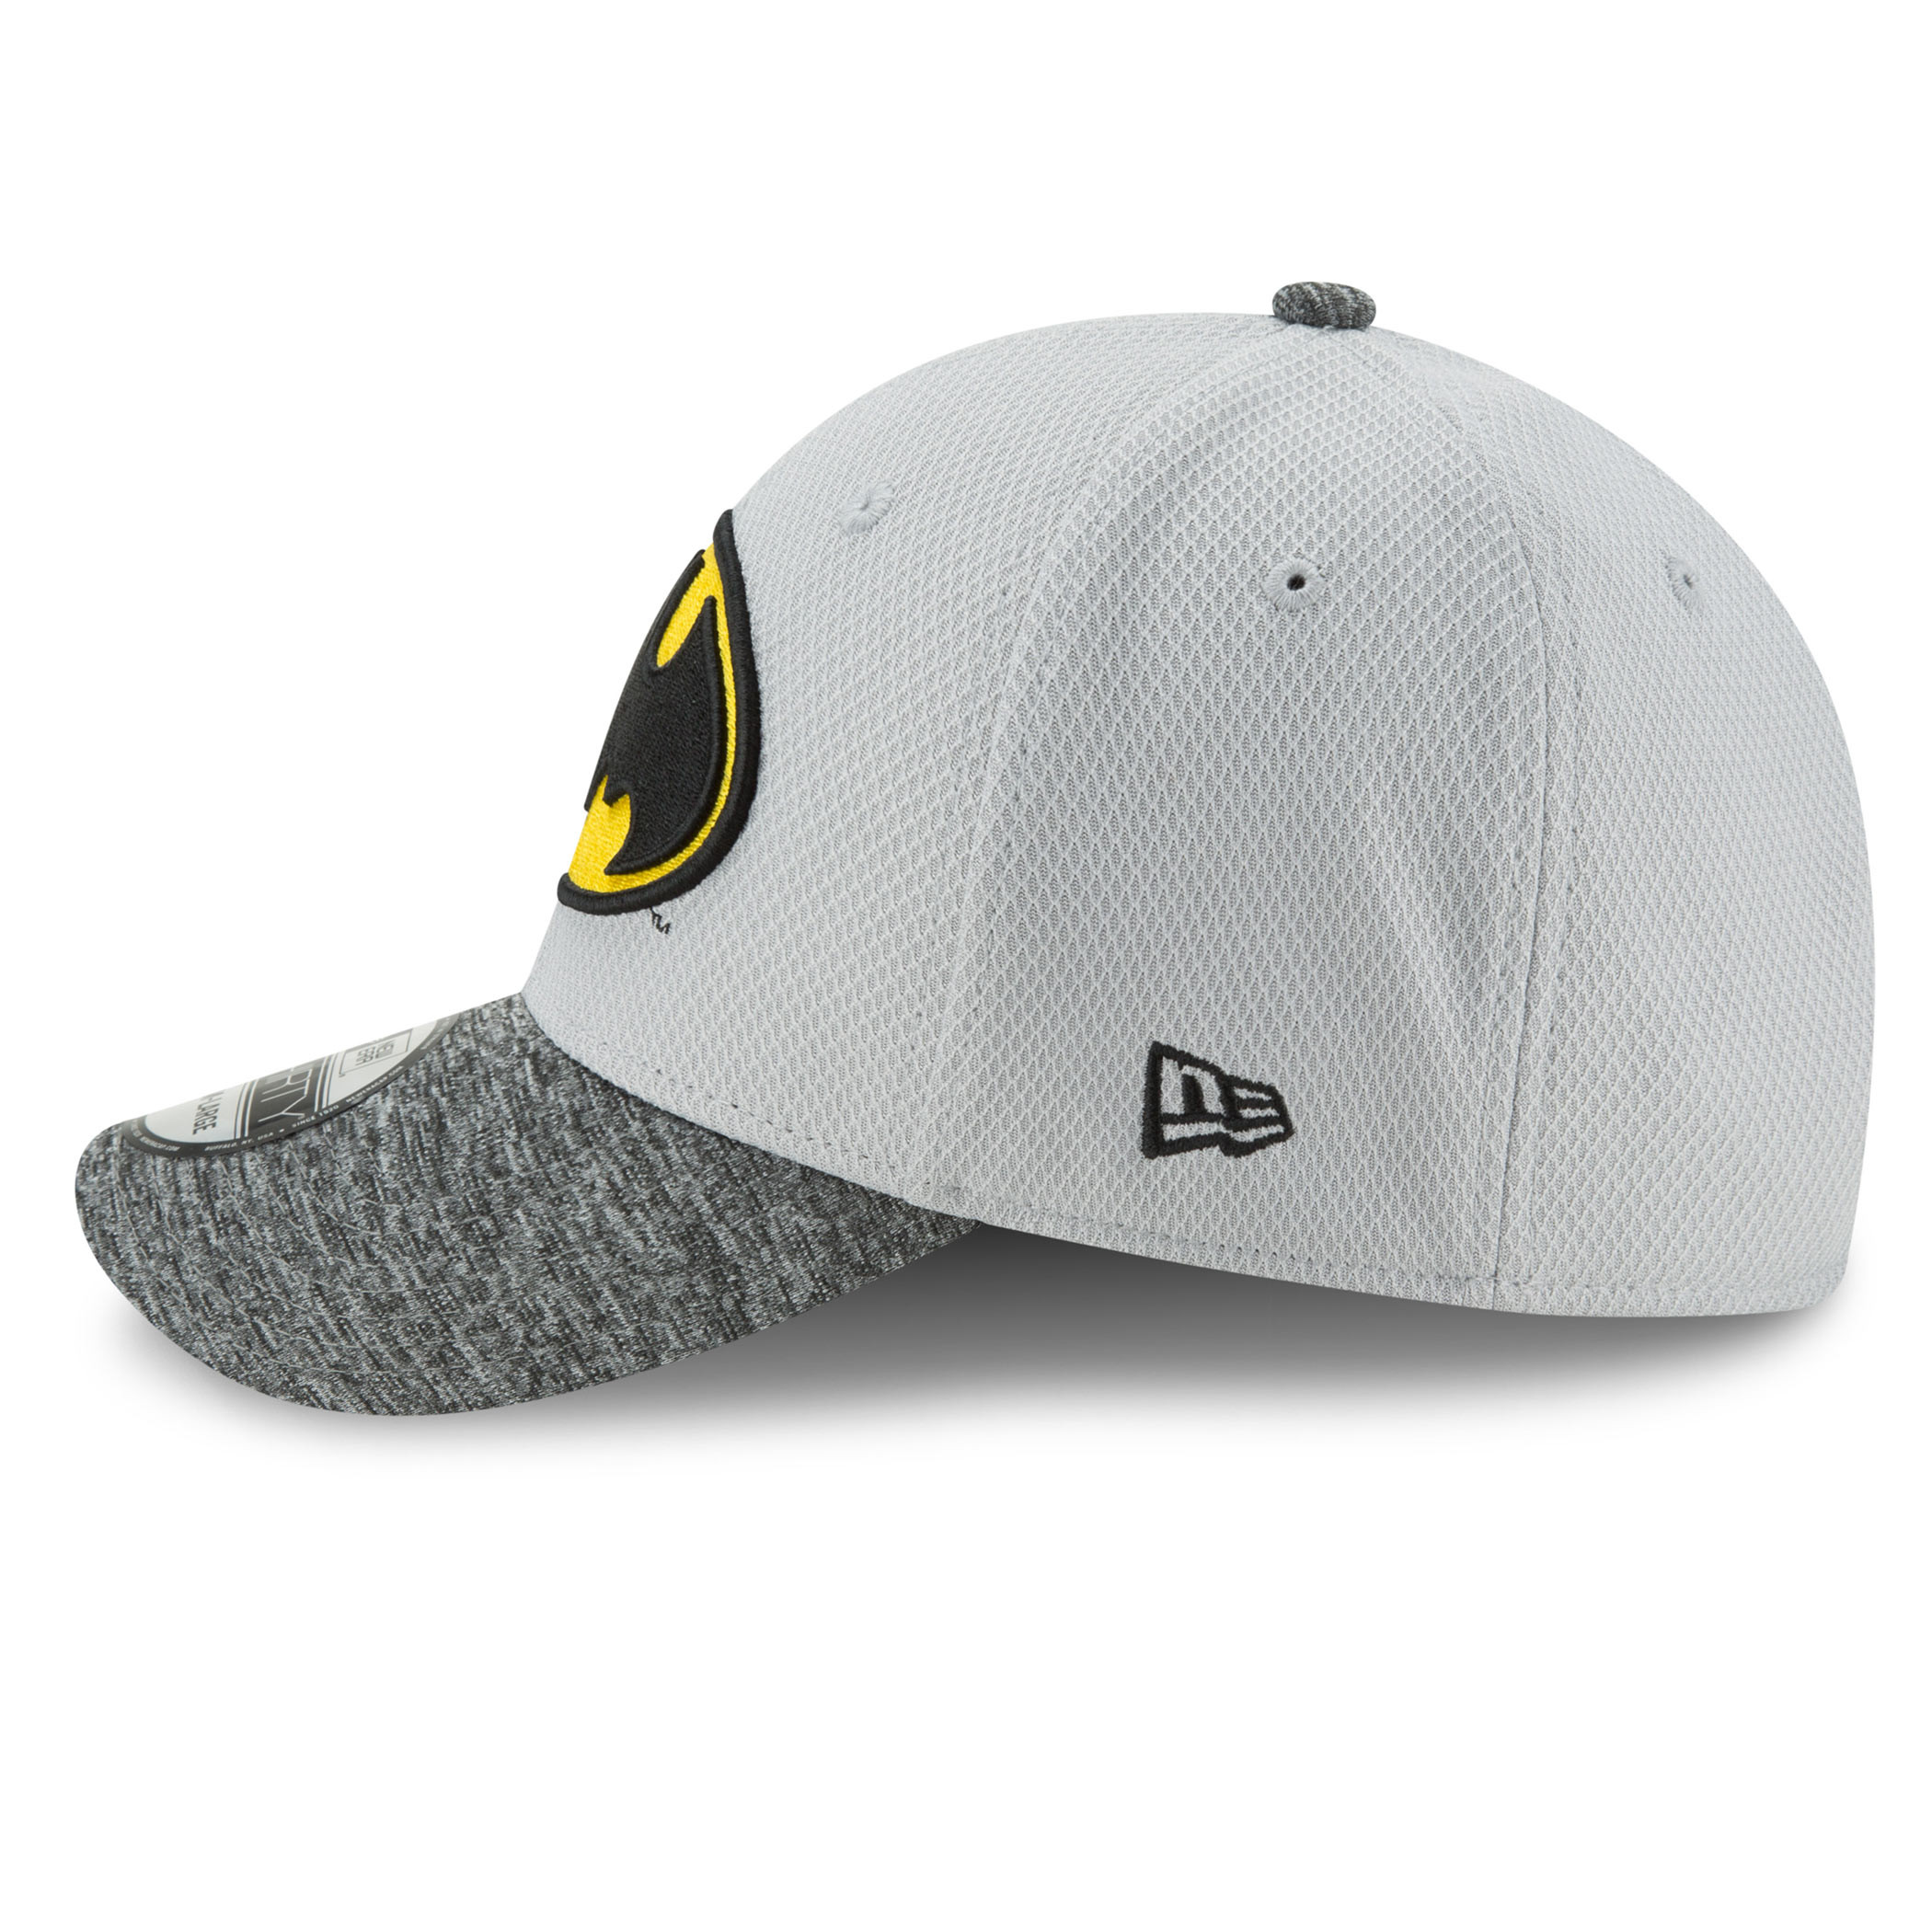 Batman Shaded Team Colors New Era 39Thirty Flex Fitted Hat